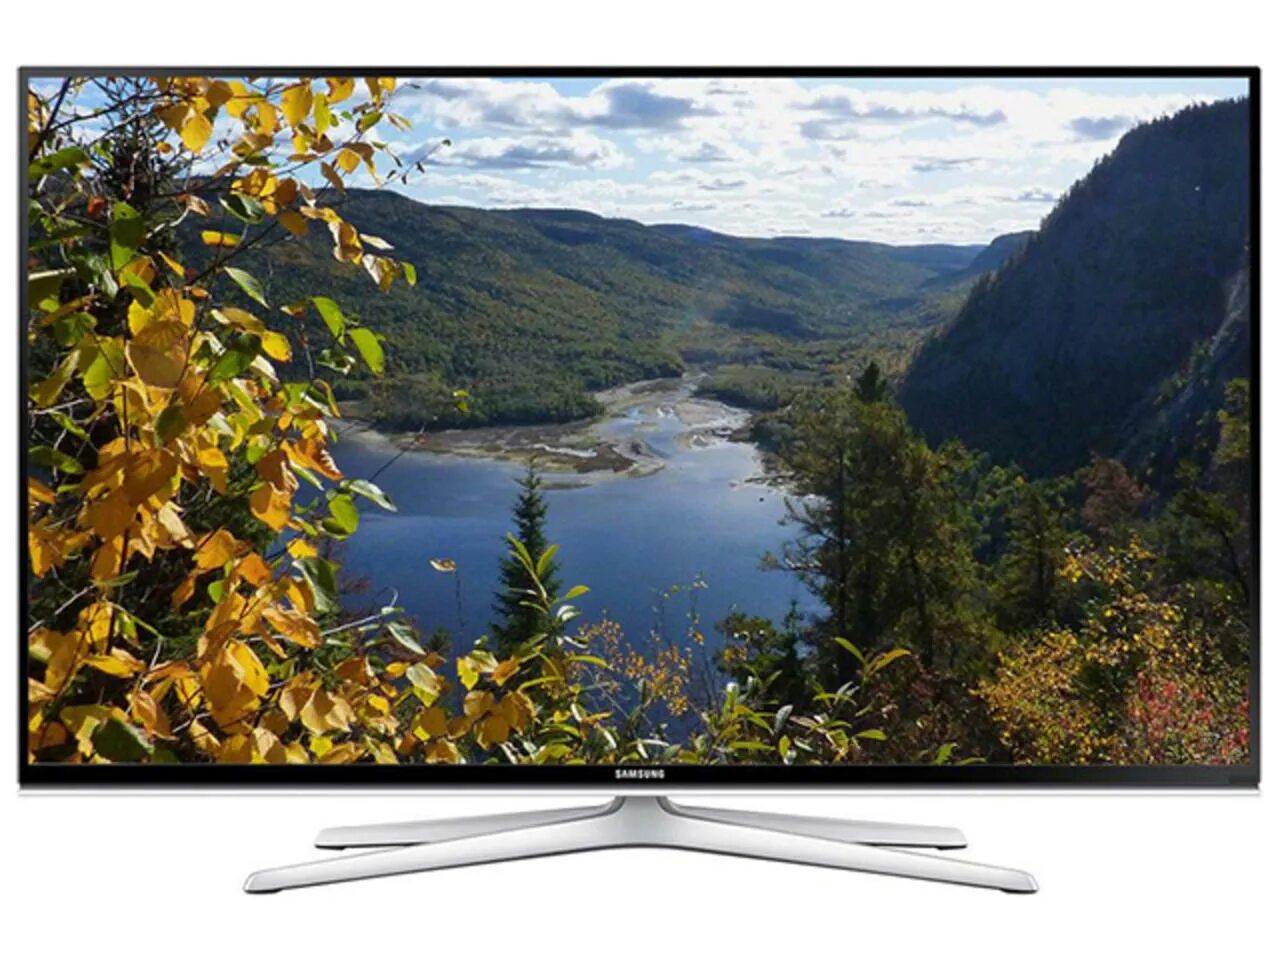 Телевизор 101 см. Samsung ue48h6500. Samsung ue48h6400. Samsung ue48h6200 led. Телевизор Samsung ue48h6500.